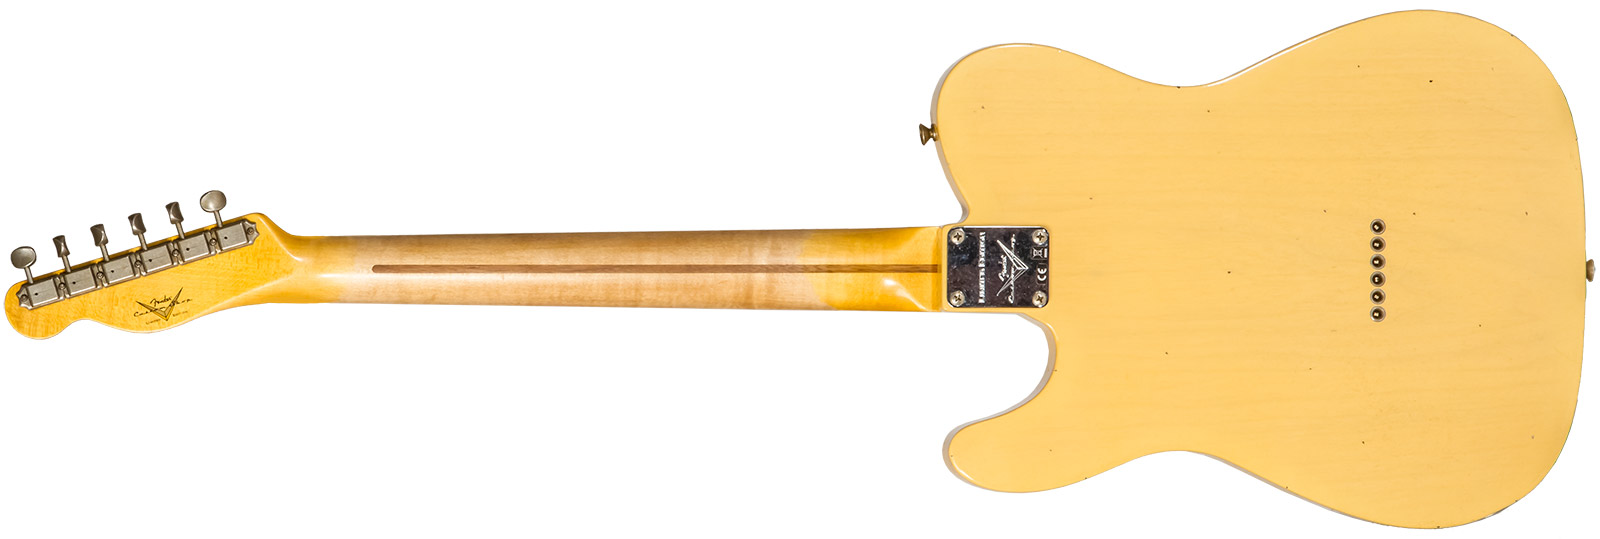 Fender Custom Shop Tele 1953 2s Ht Mn #r128606 - Journeyman Relic Aged Nocaster Blonde - Tel shape electric guitar - Variation 1